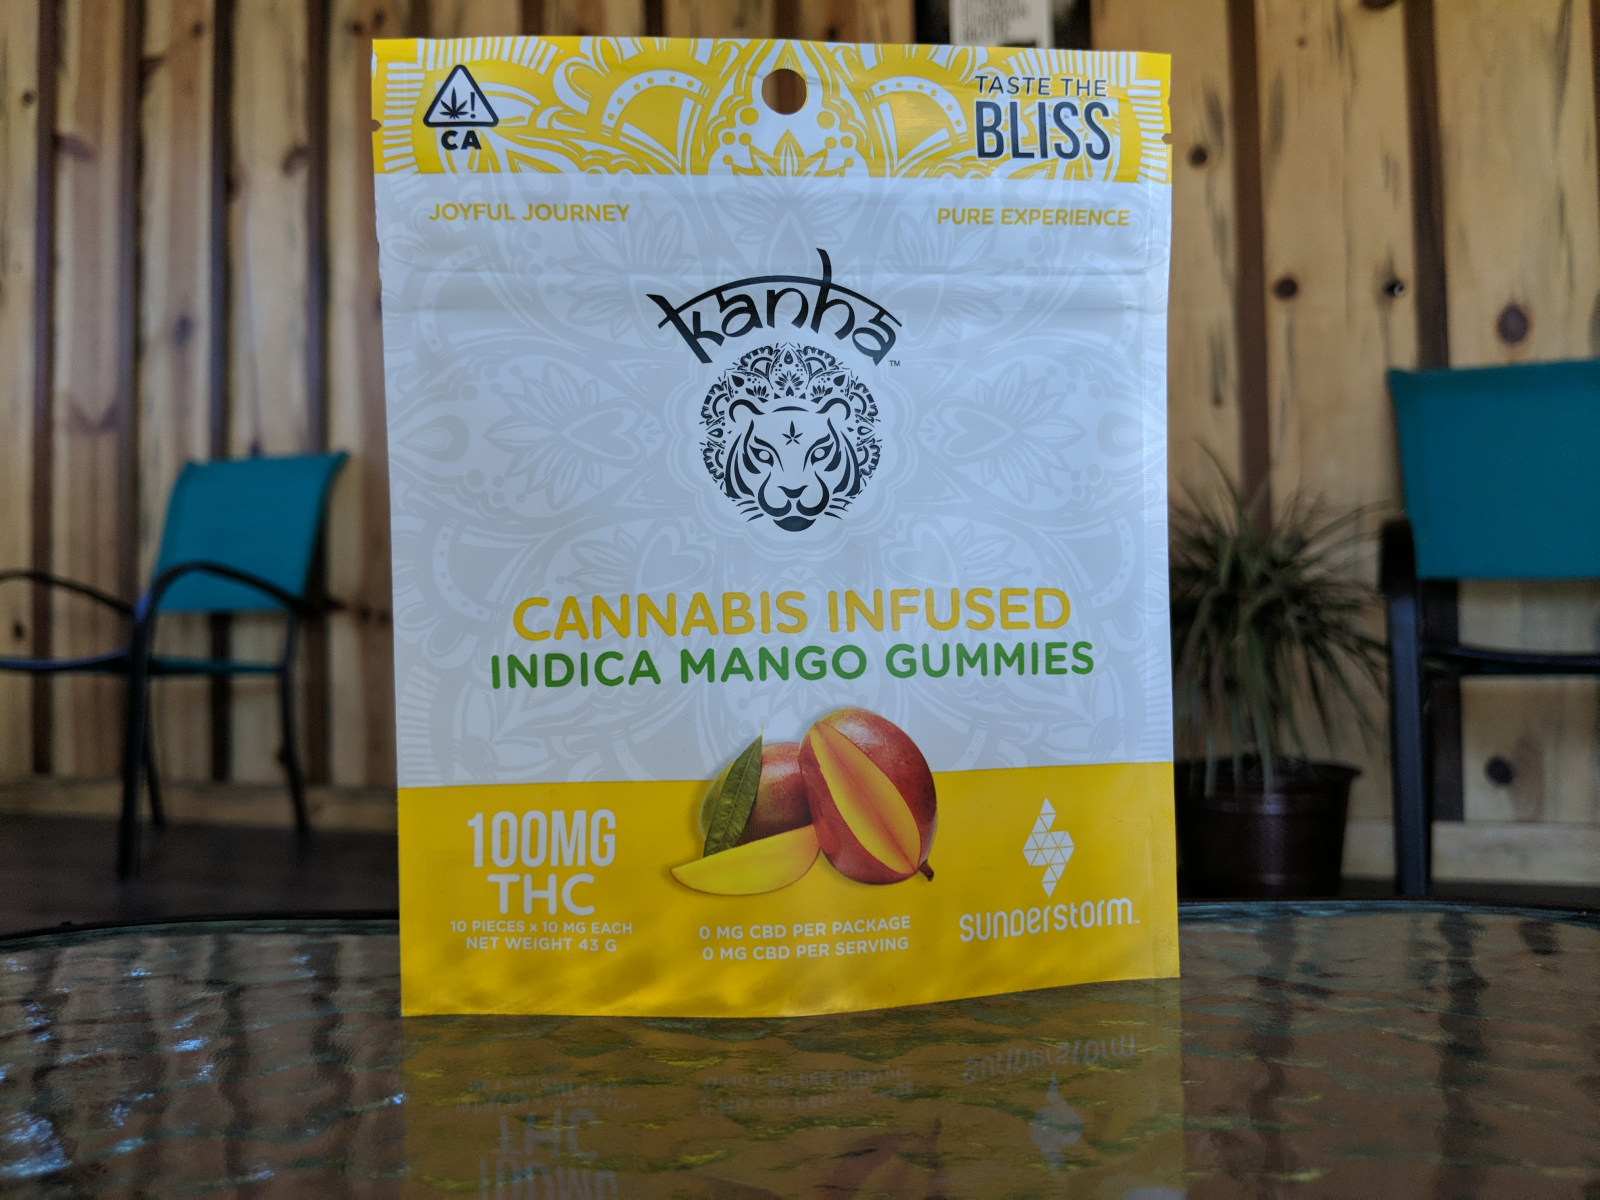 Kanha gummies Indica mango 100mg THC 